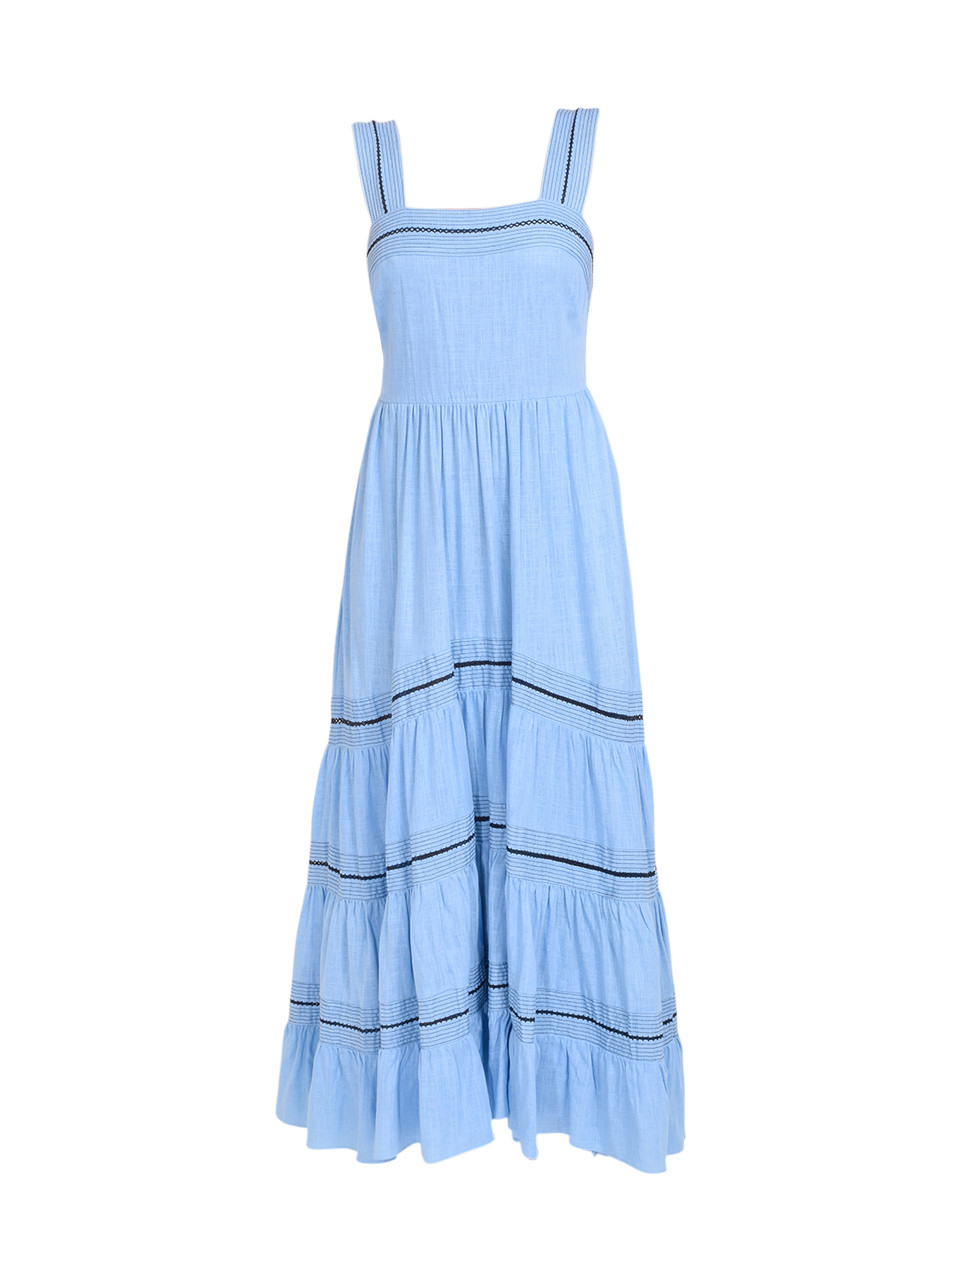 MISA Aurelia Dress in Pale Blue Linen